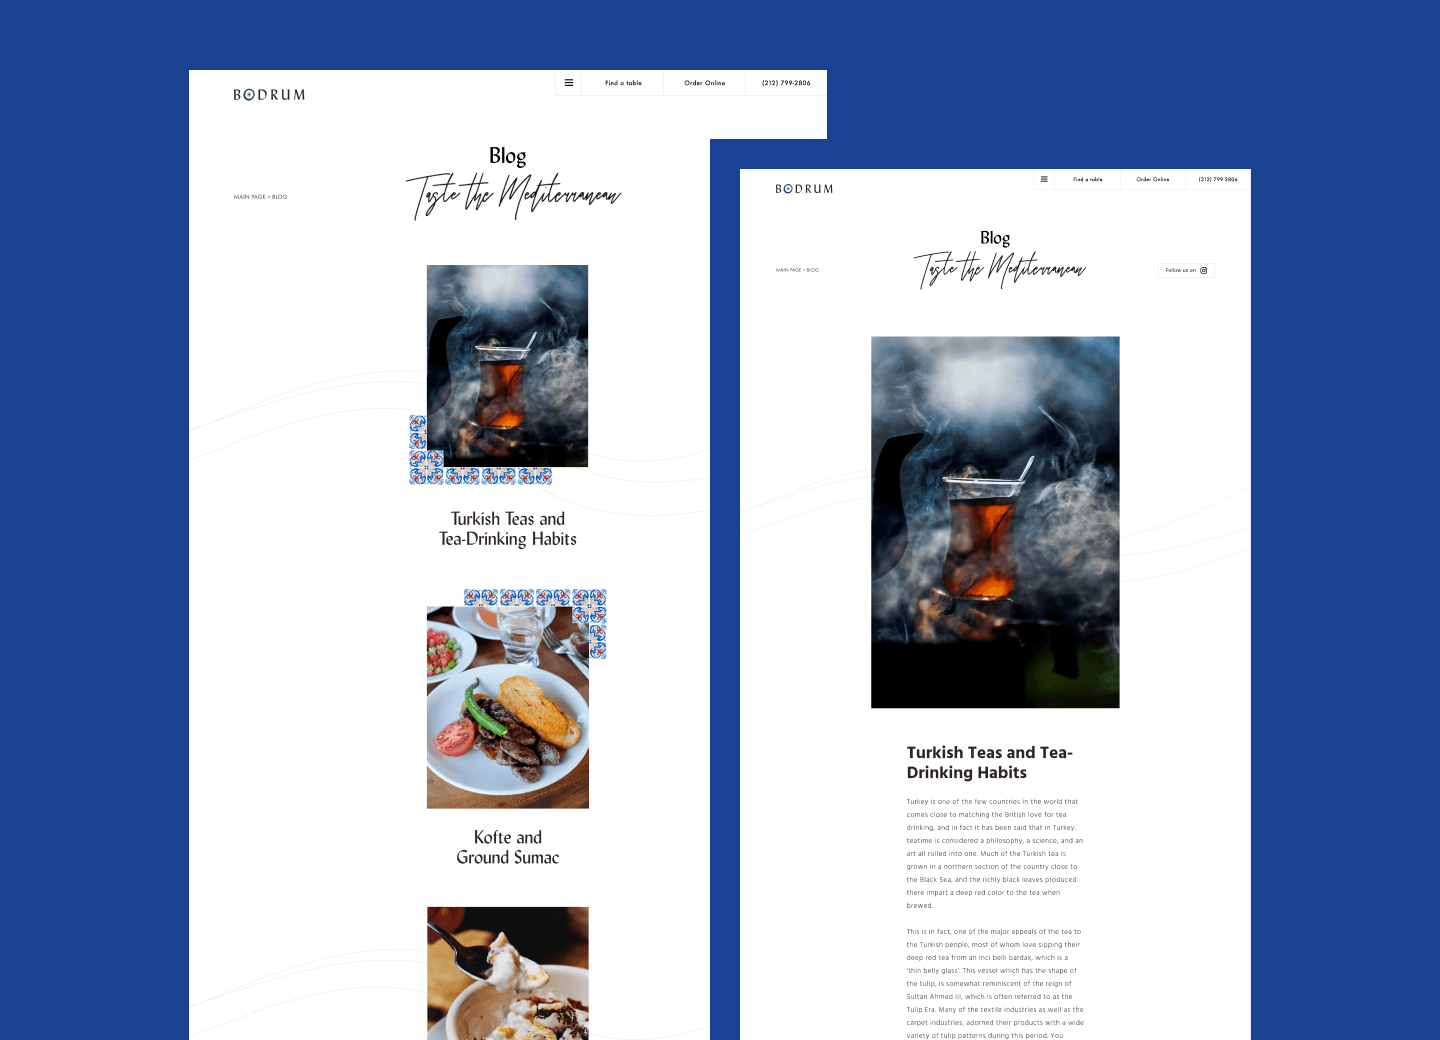 Bodrums-New-Restaurant-Blog-Design-2